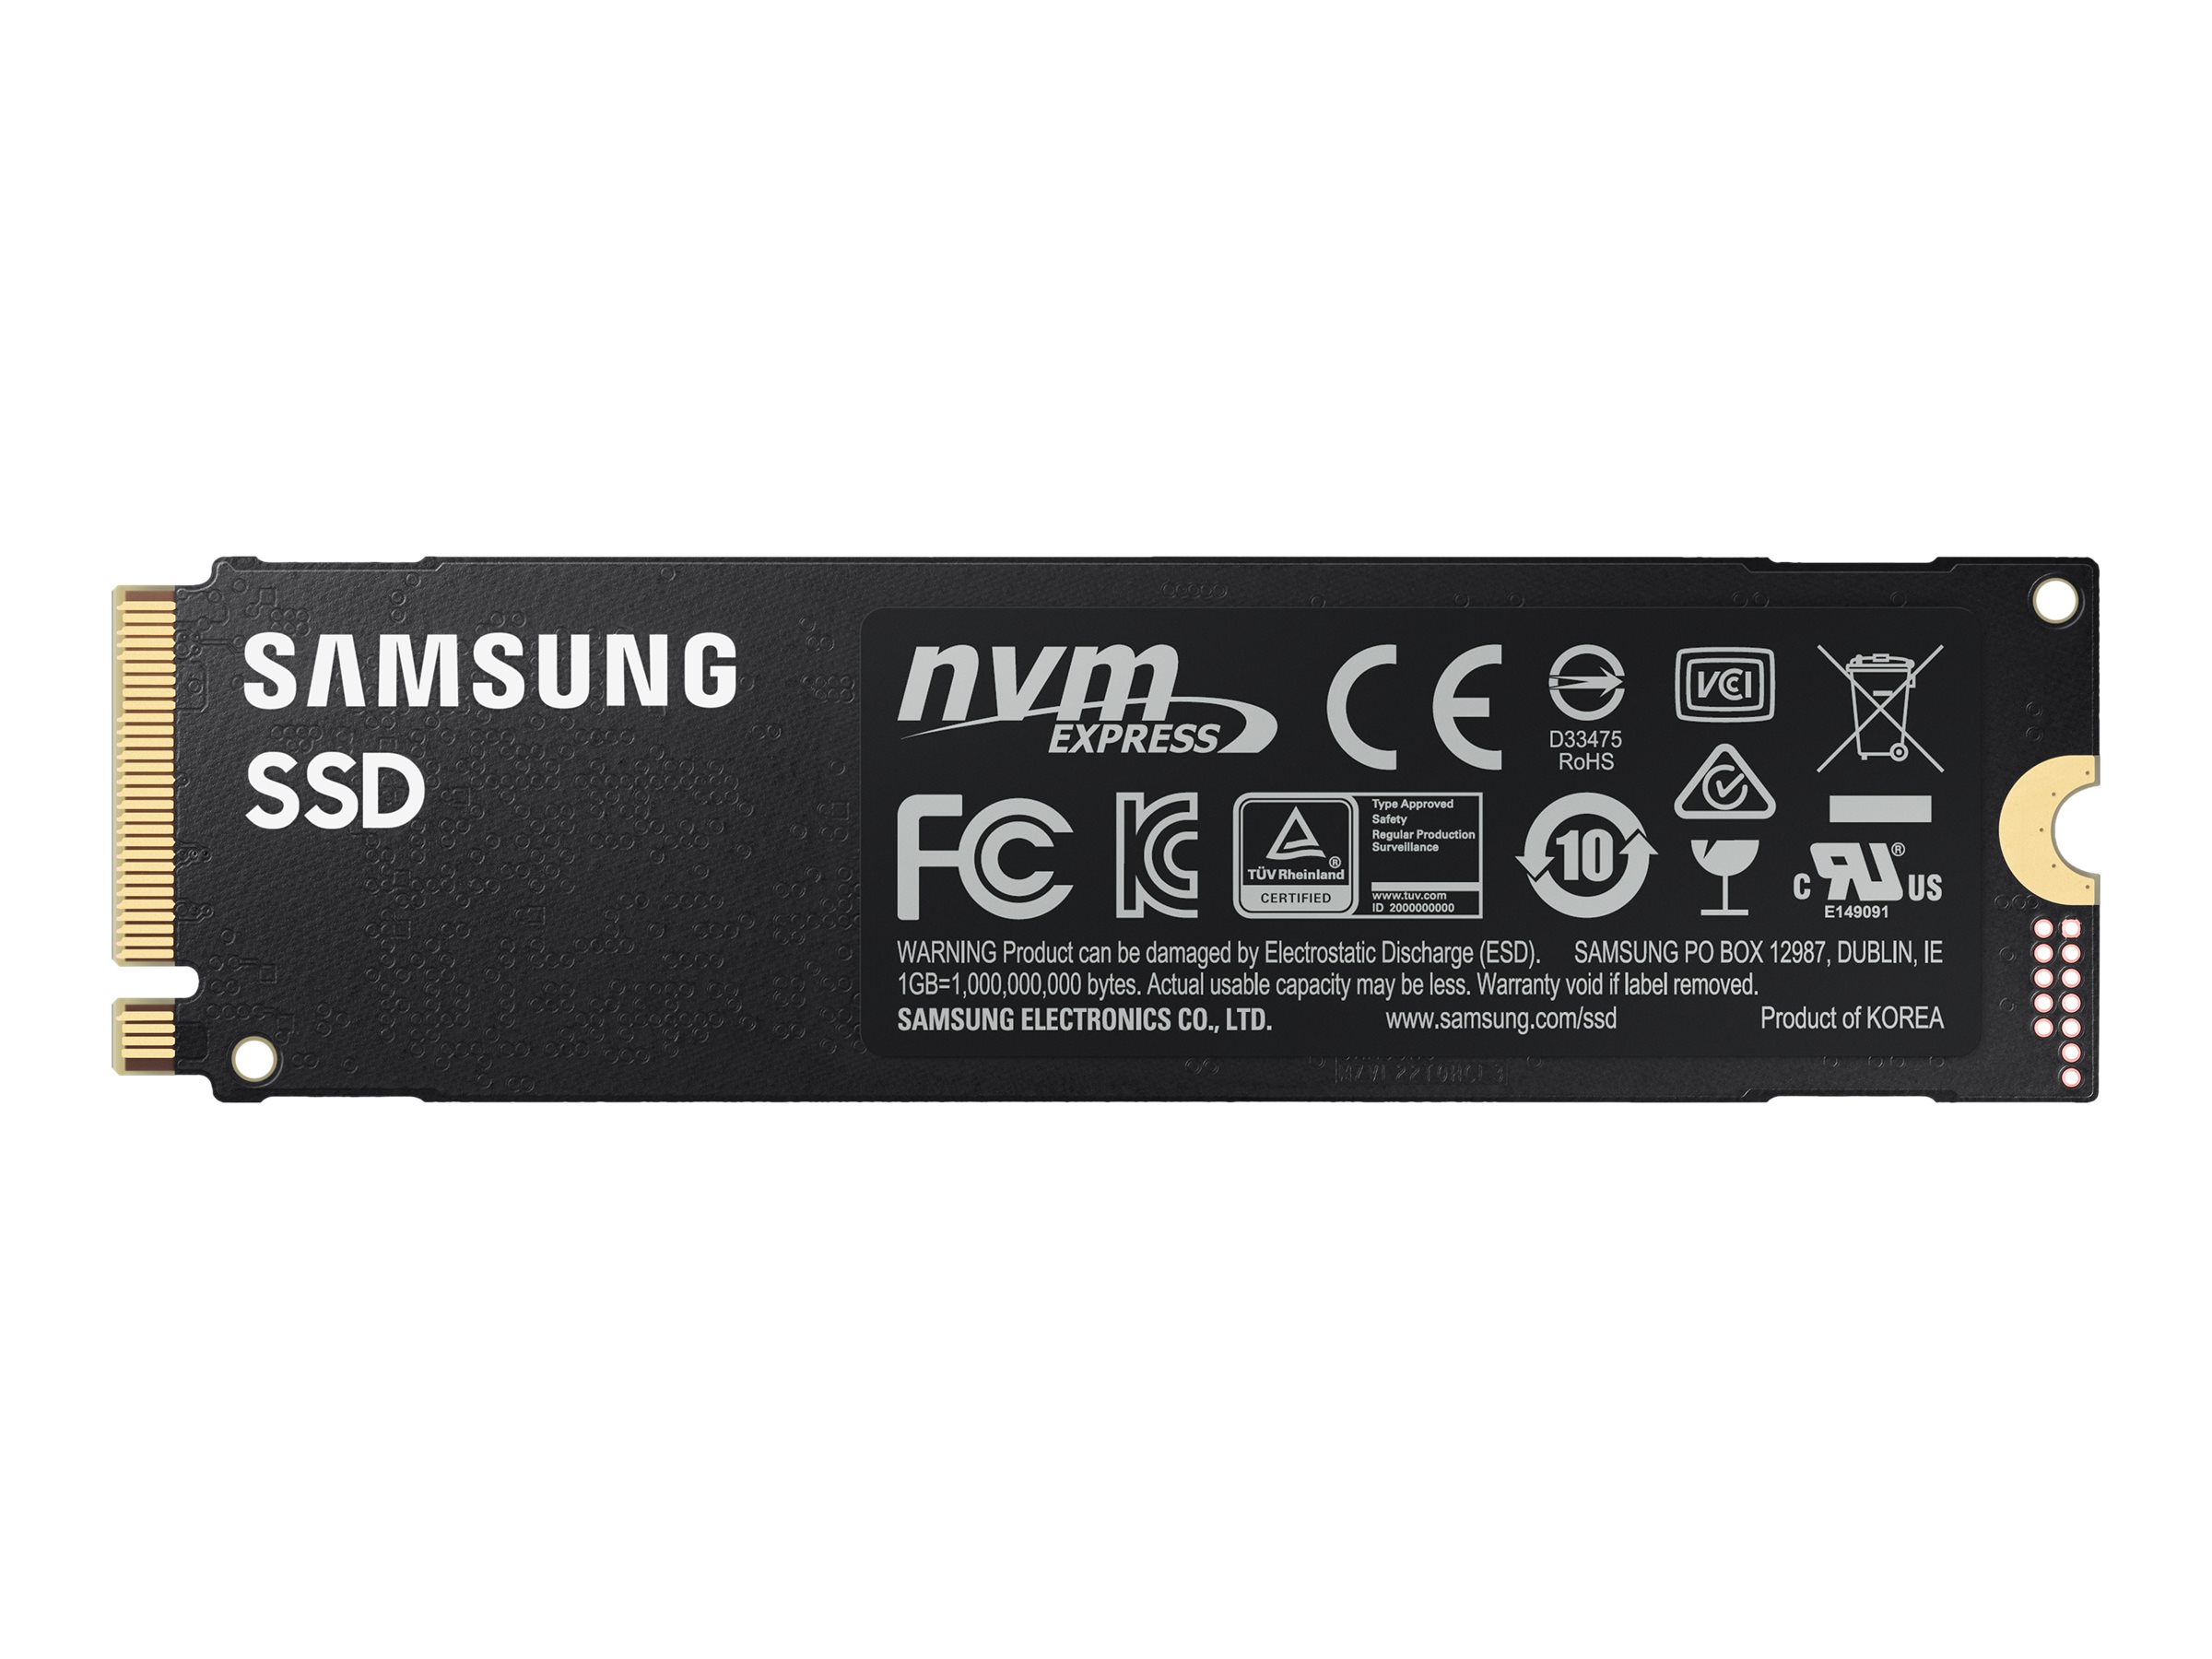 Samsung 980 Pro 1TB - PCIe 4.0 - M.2 NVMe SSD